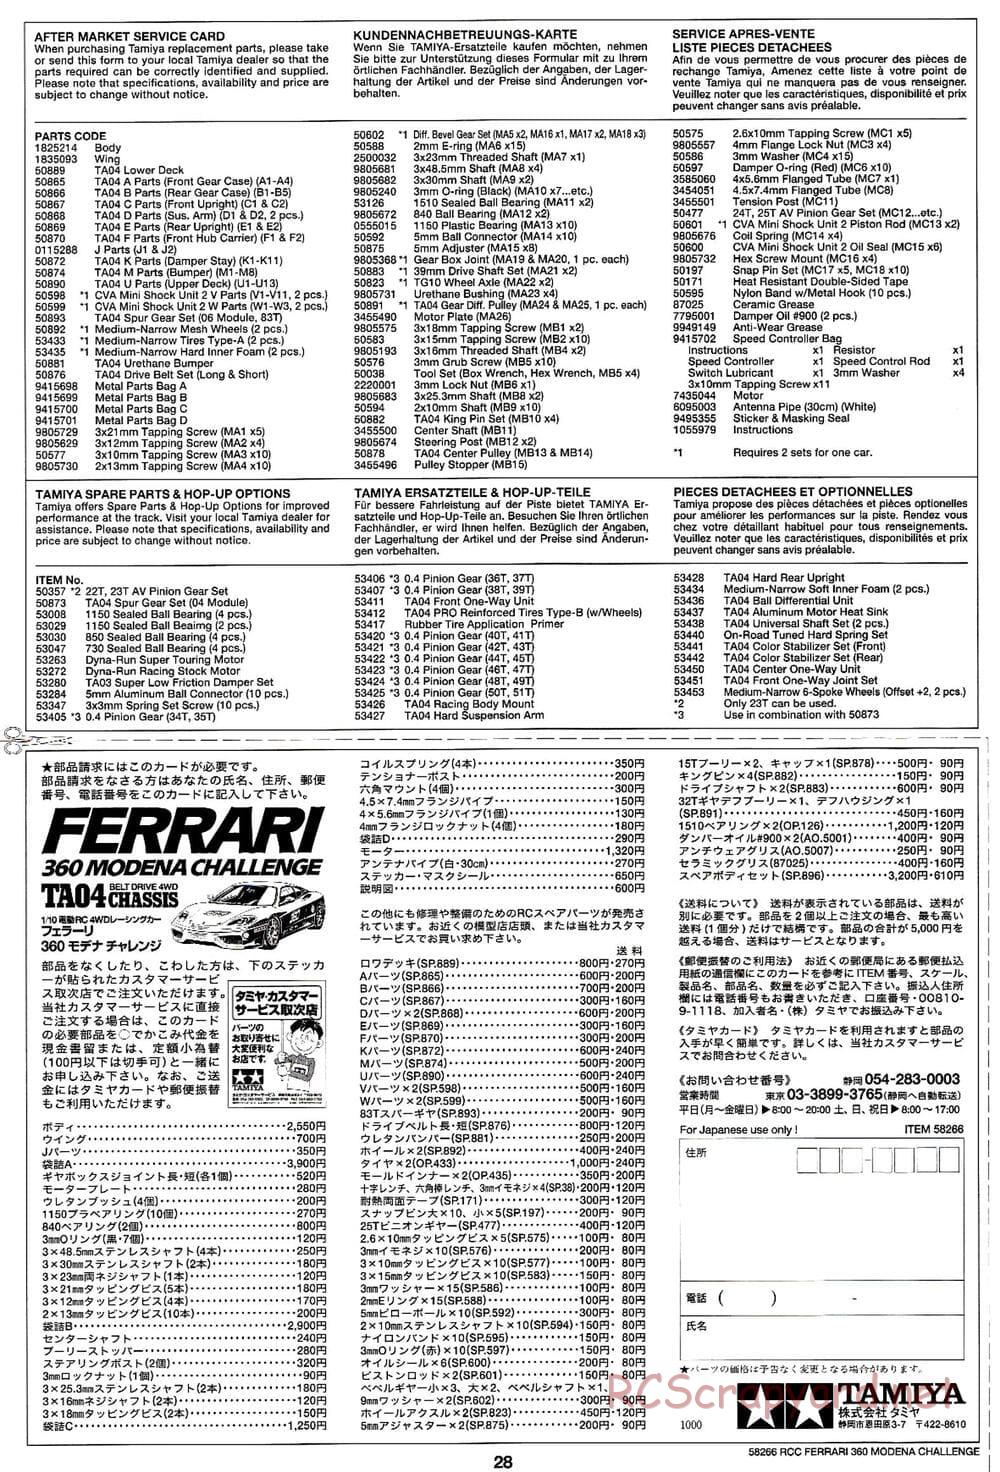 Tamiya - Ferrari 360 Modena Challenge - TA-04 Chassis - Manual - Page 28